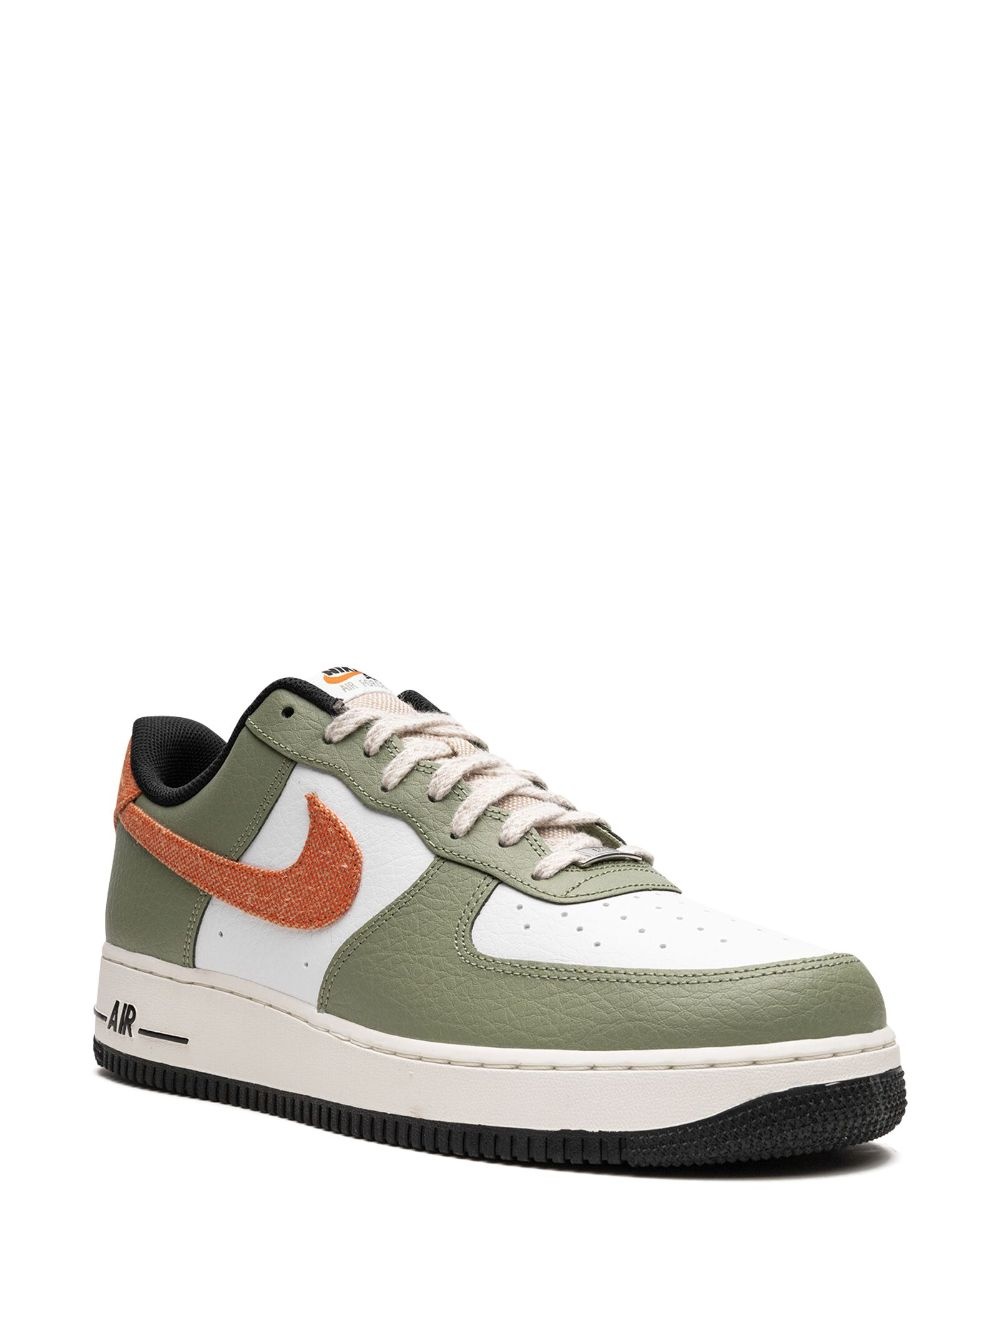 Air Force 1 Low "Oil Green" sneakers - 2